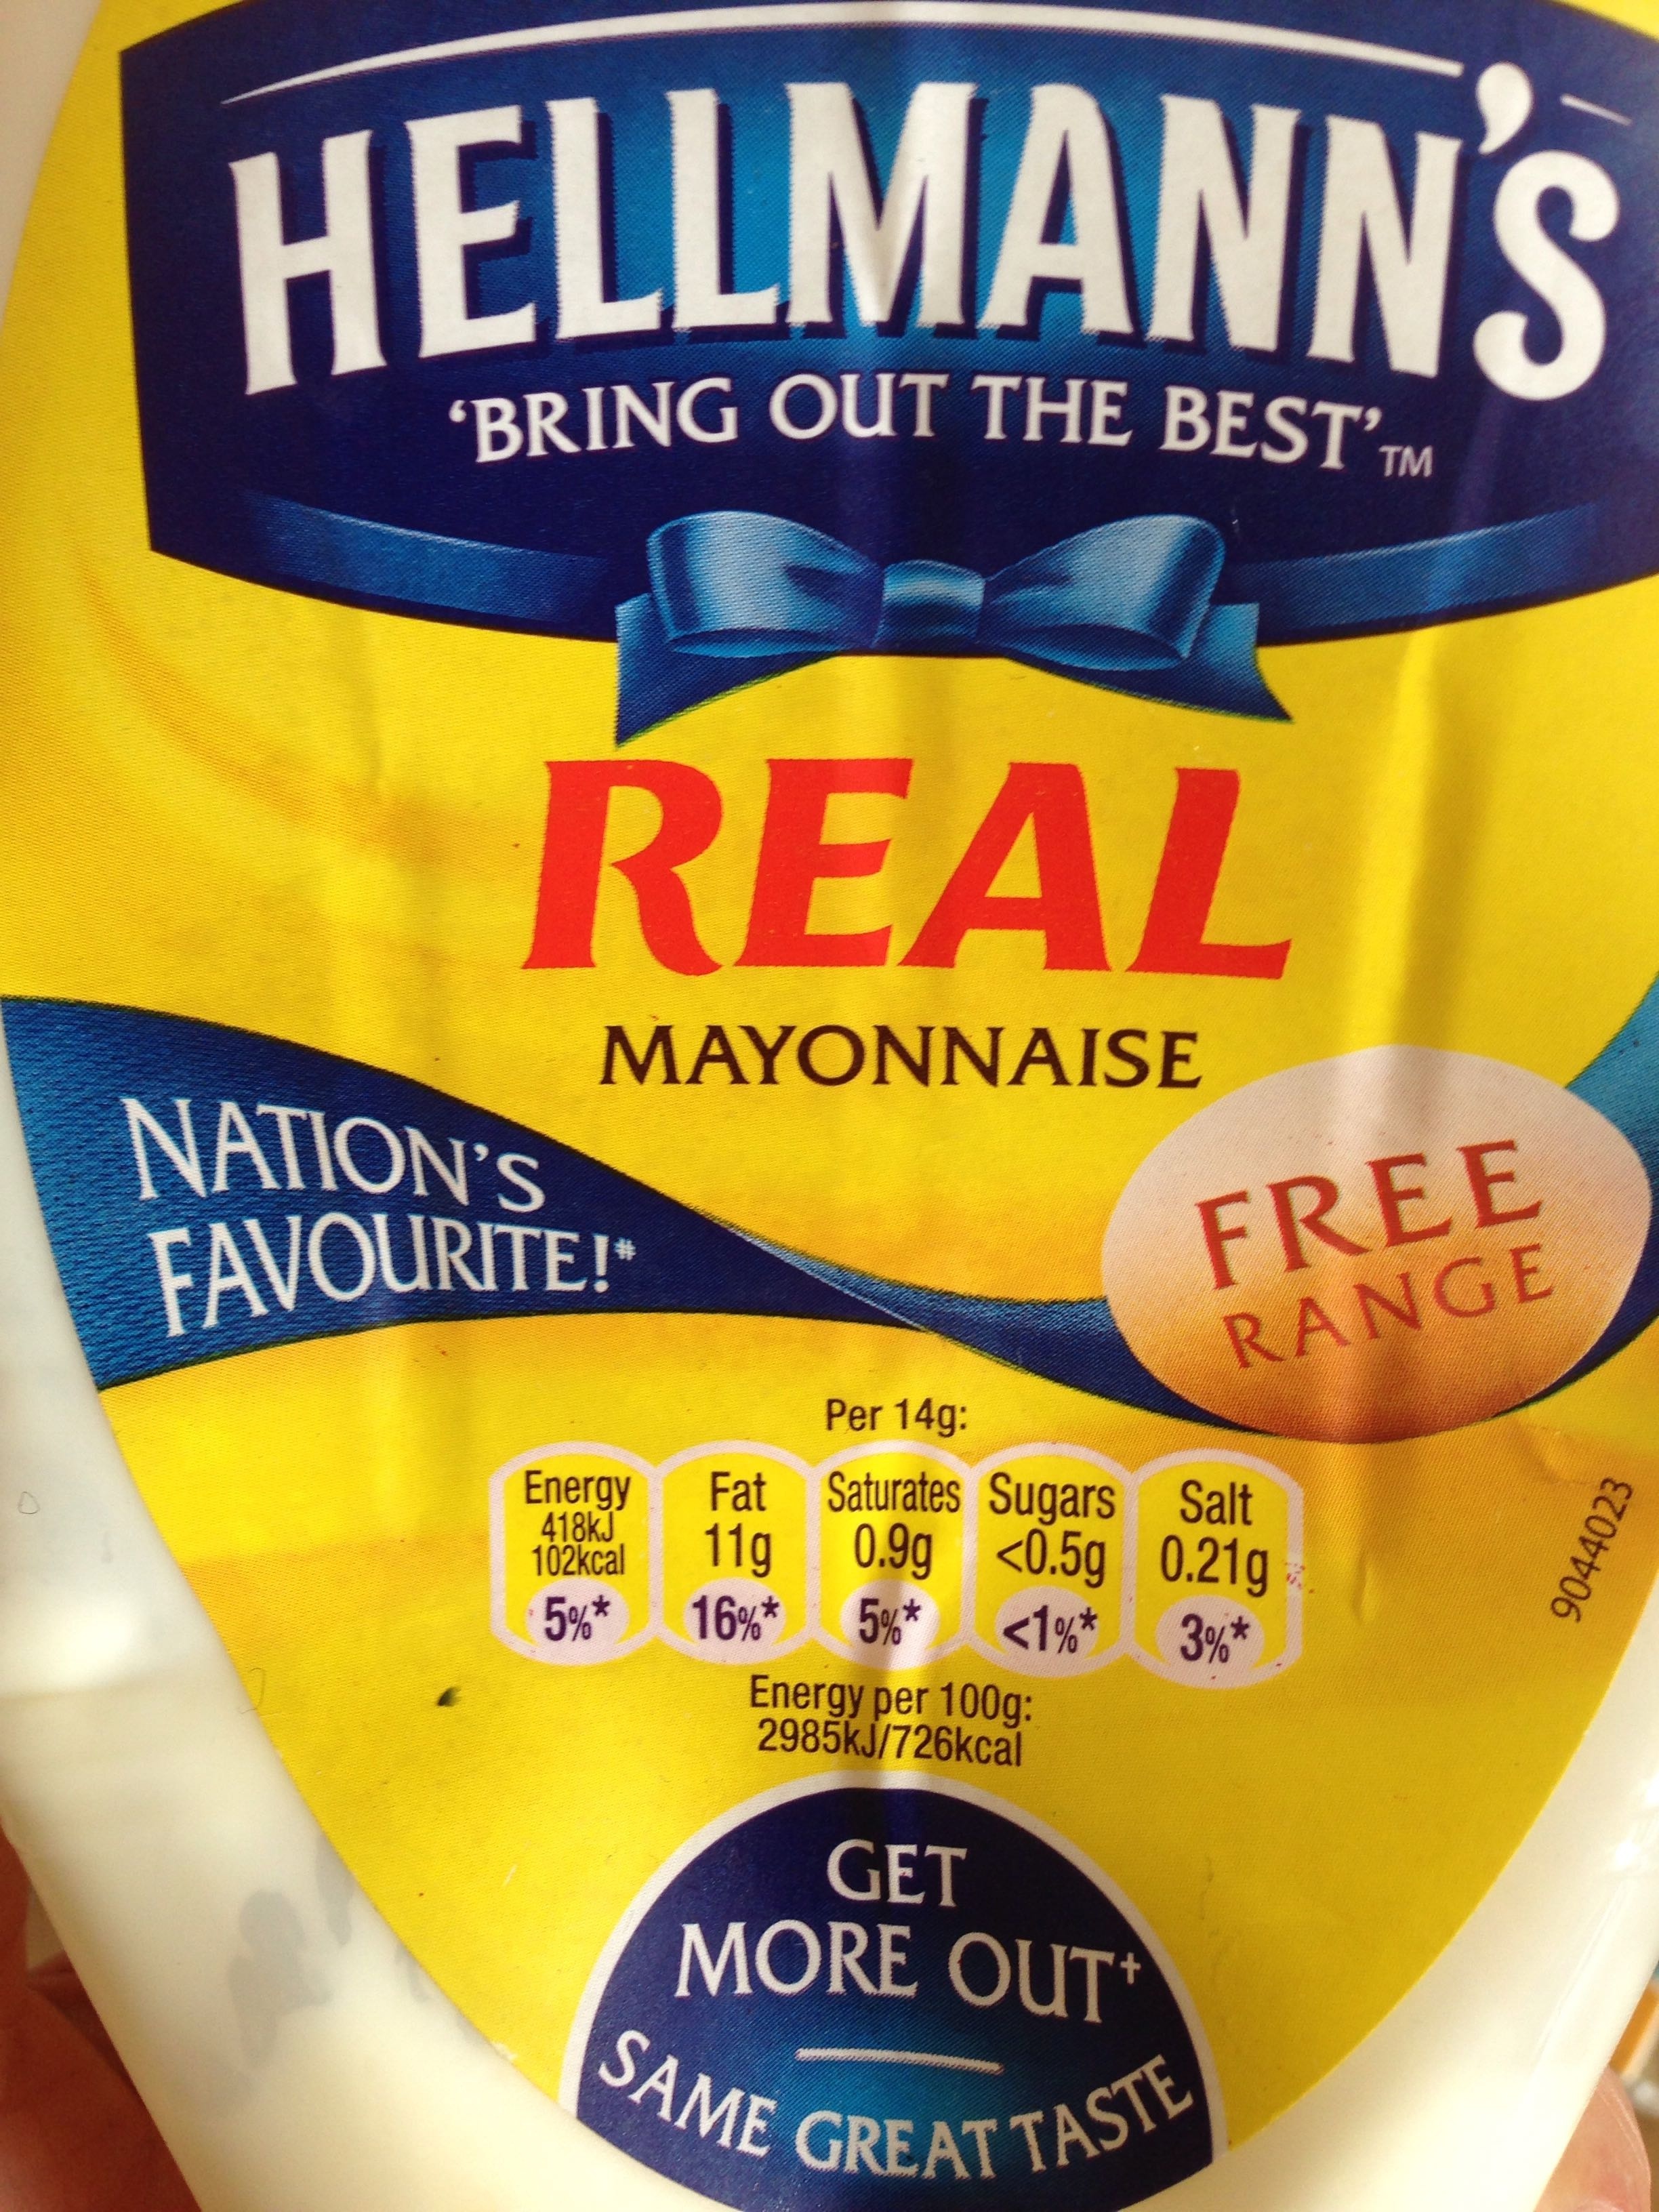 Real Mayonnaise (Free Range) - Product - en